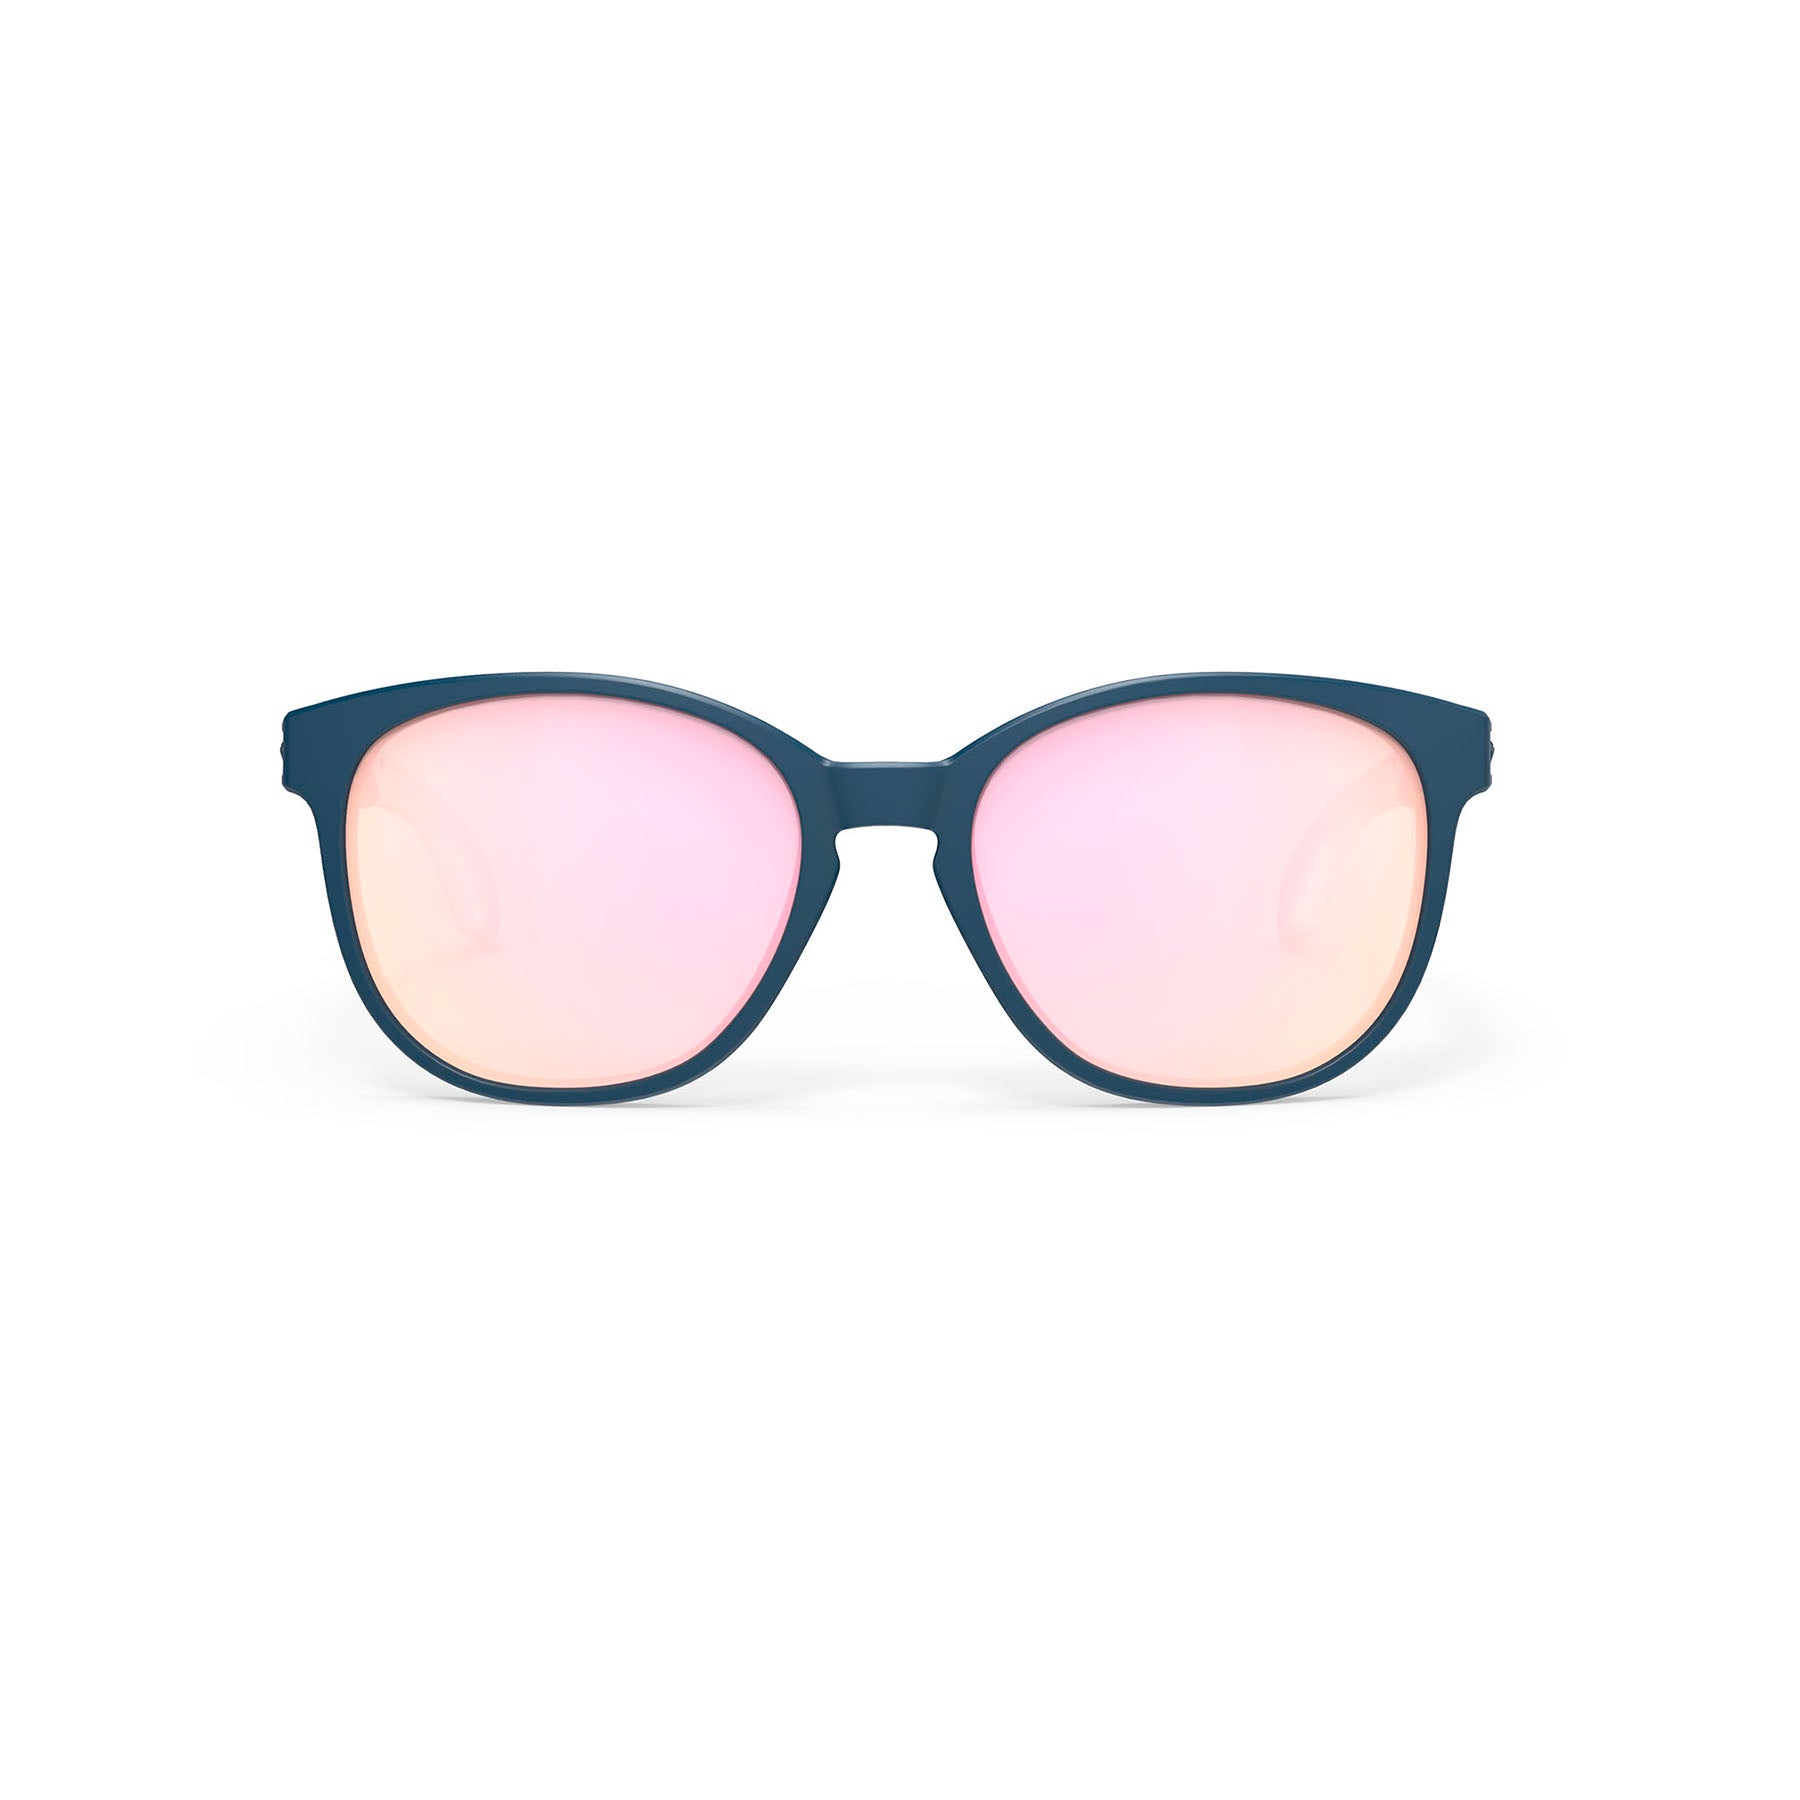 Rudy Project Lightflow B prescription ready active lifestyle sunglasses#color_lightflow-b-blue-navy-matte-frame-with-multilaser-rose-lenses